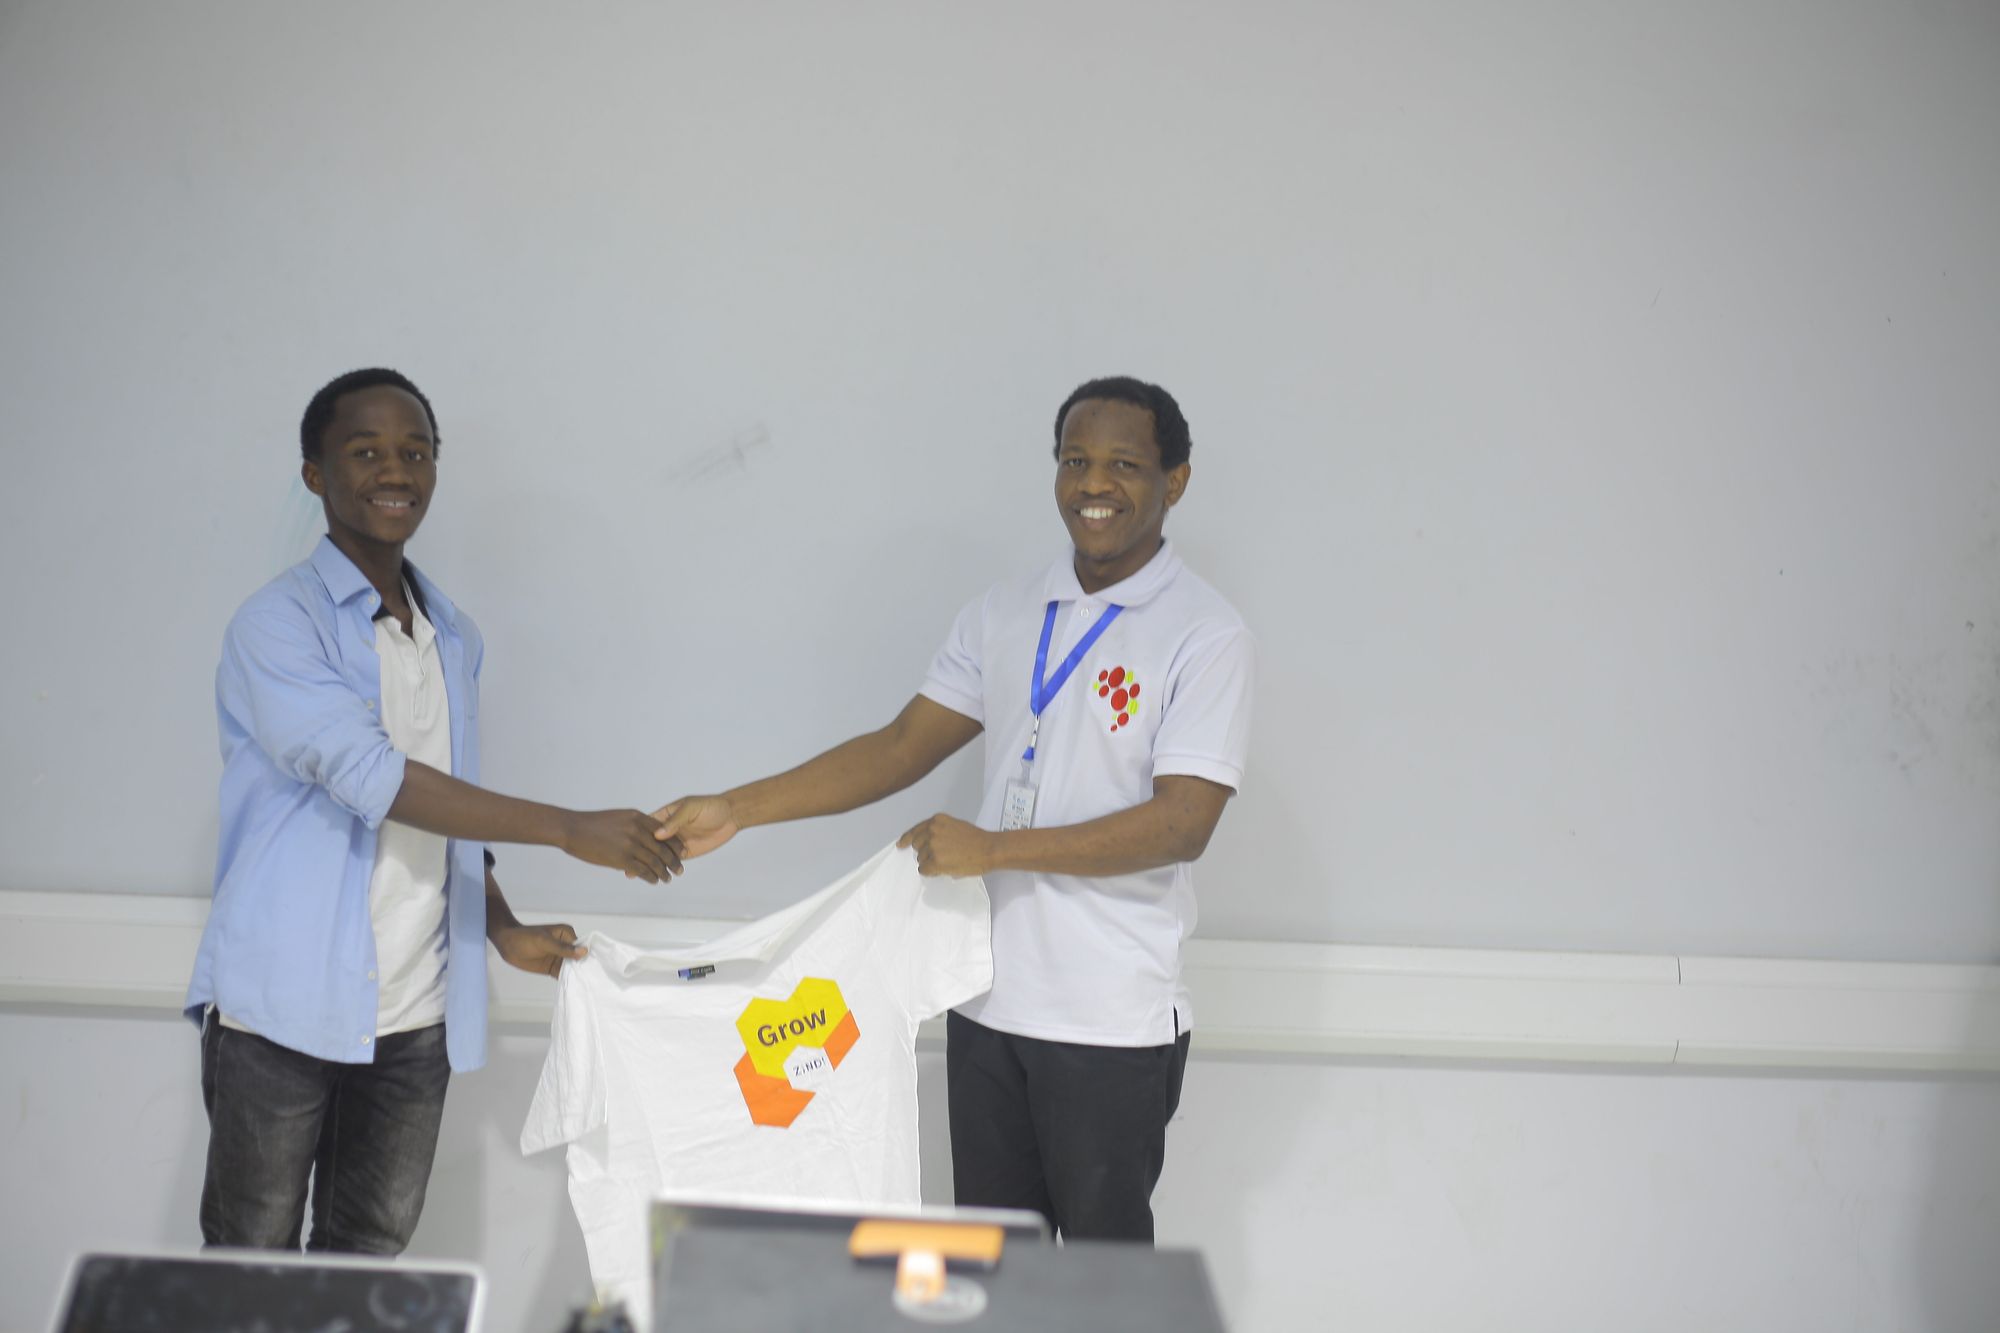 First hackathon winner: Lucas Mghasa, receiving prize (150,000 TZS, Certificate, and T-shirt)